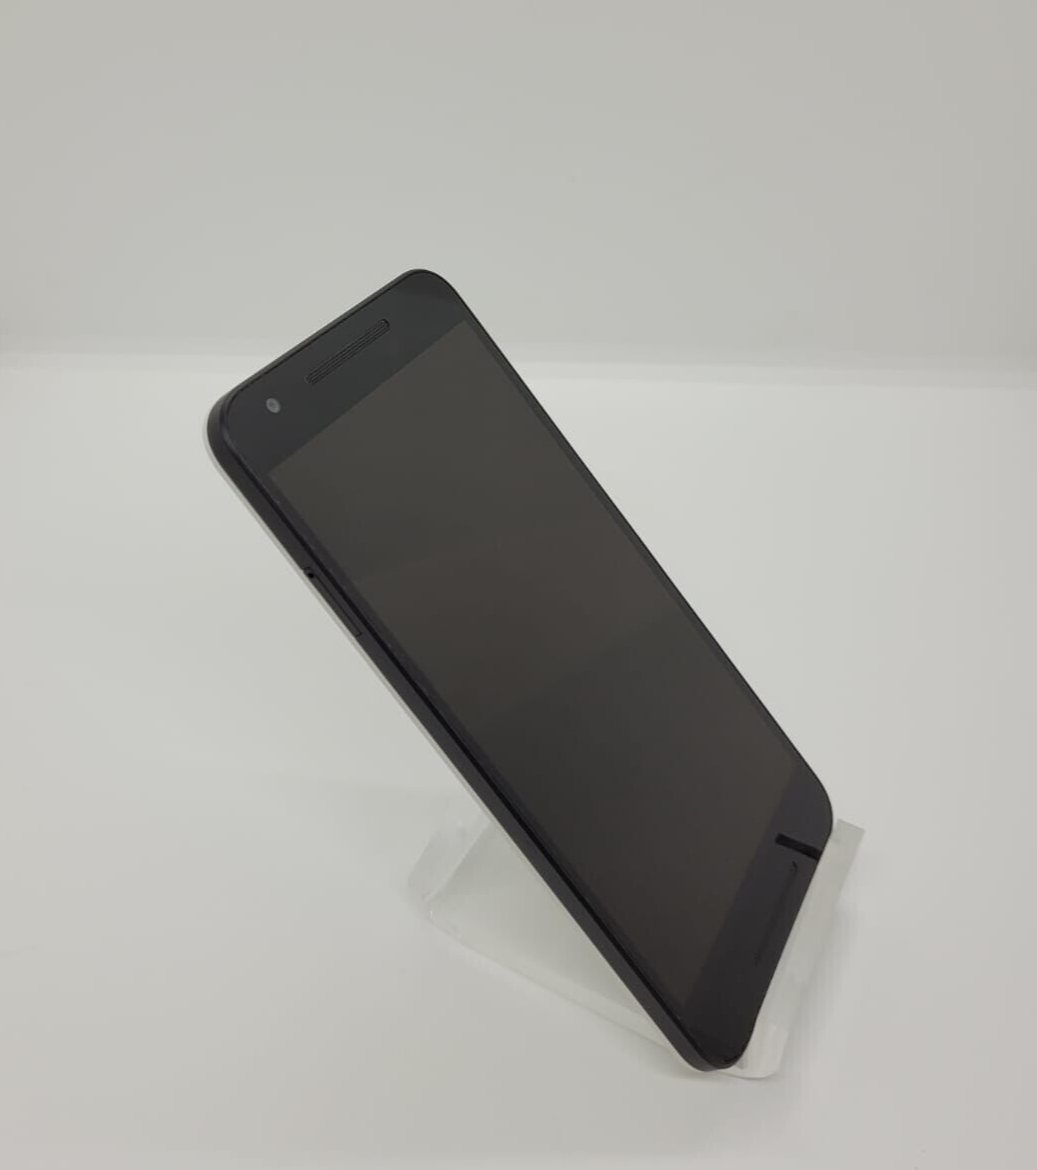 Nexus 5X 16GB White Factory Unlocked 4G LTE Smartphone H790